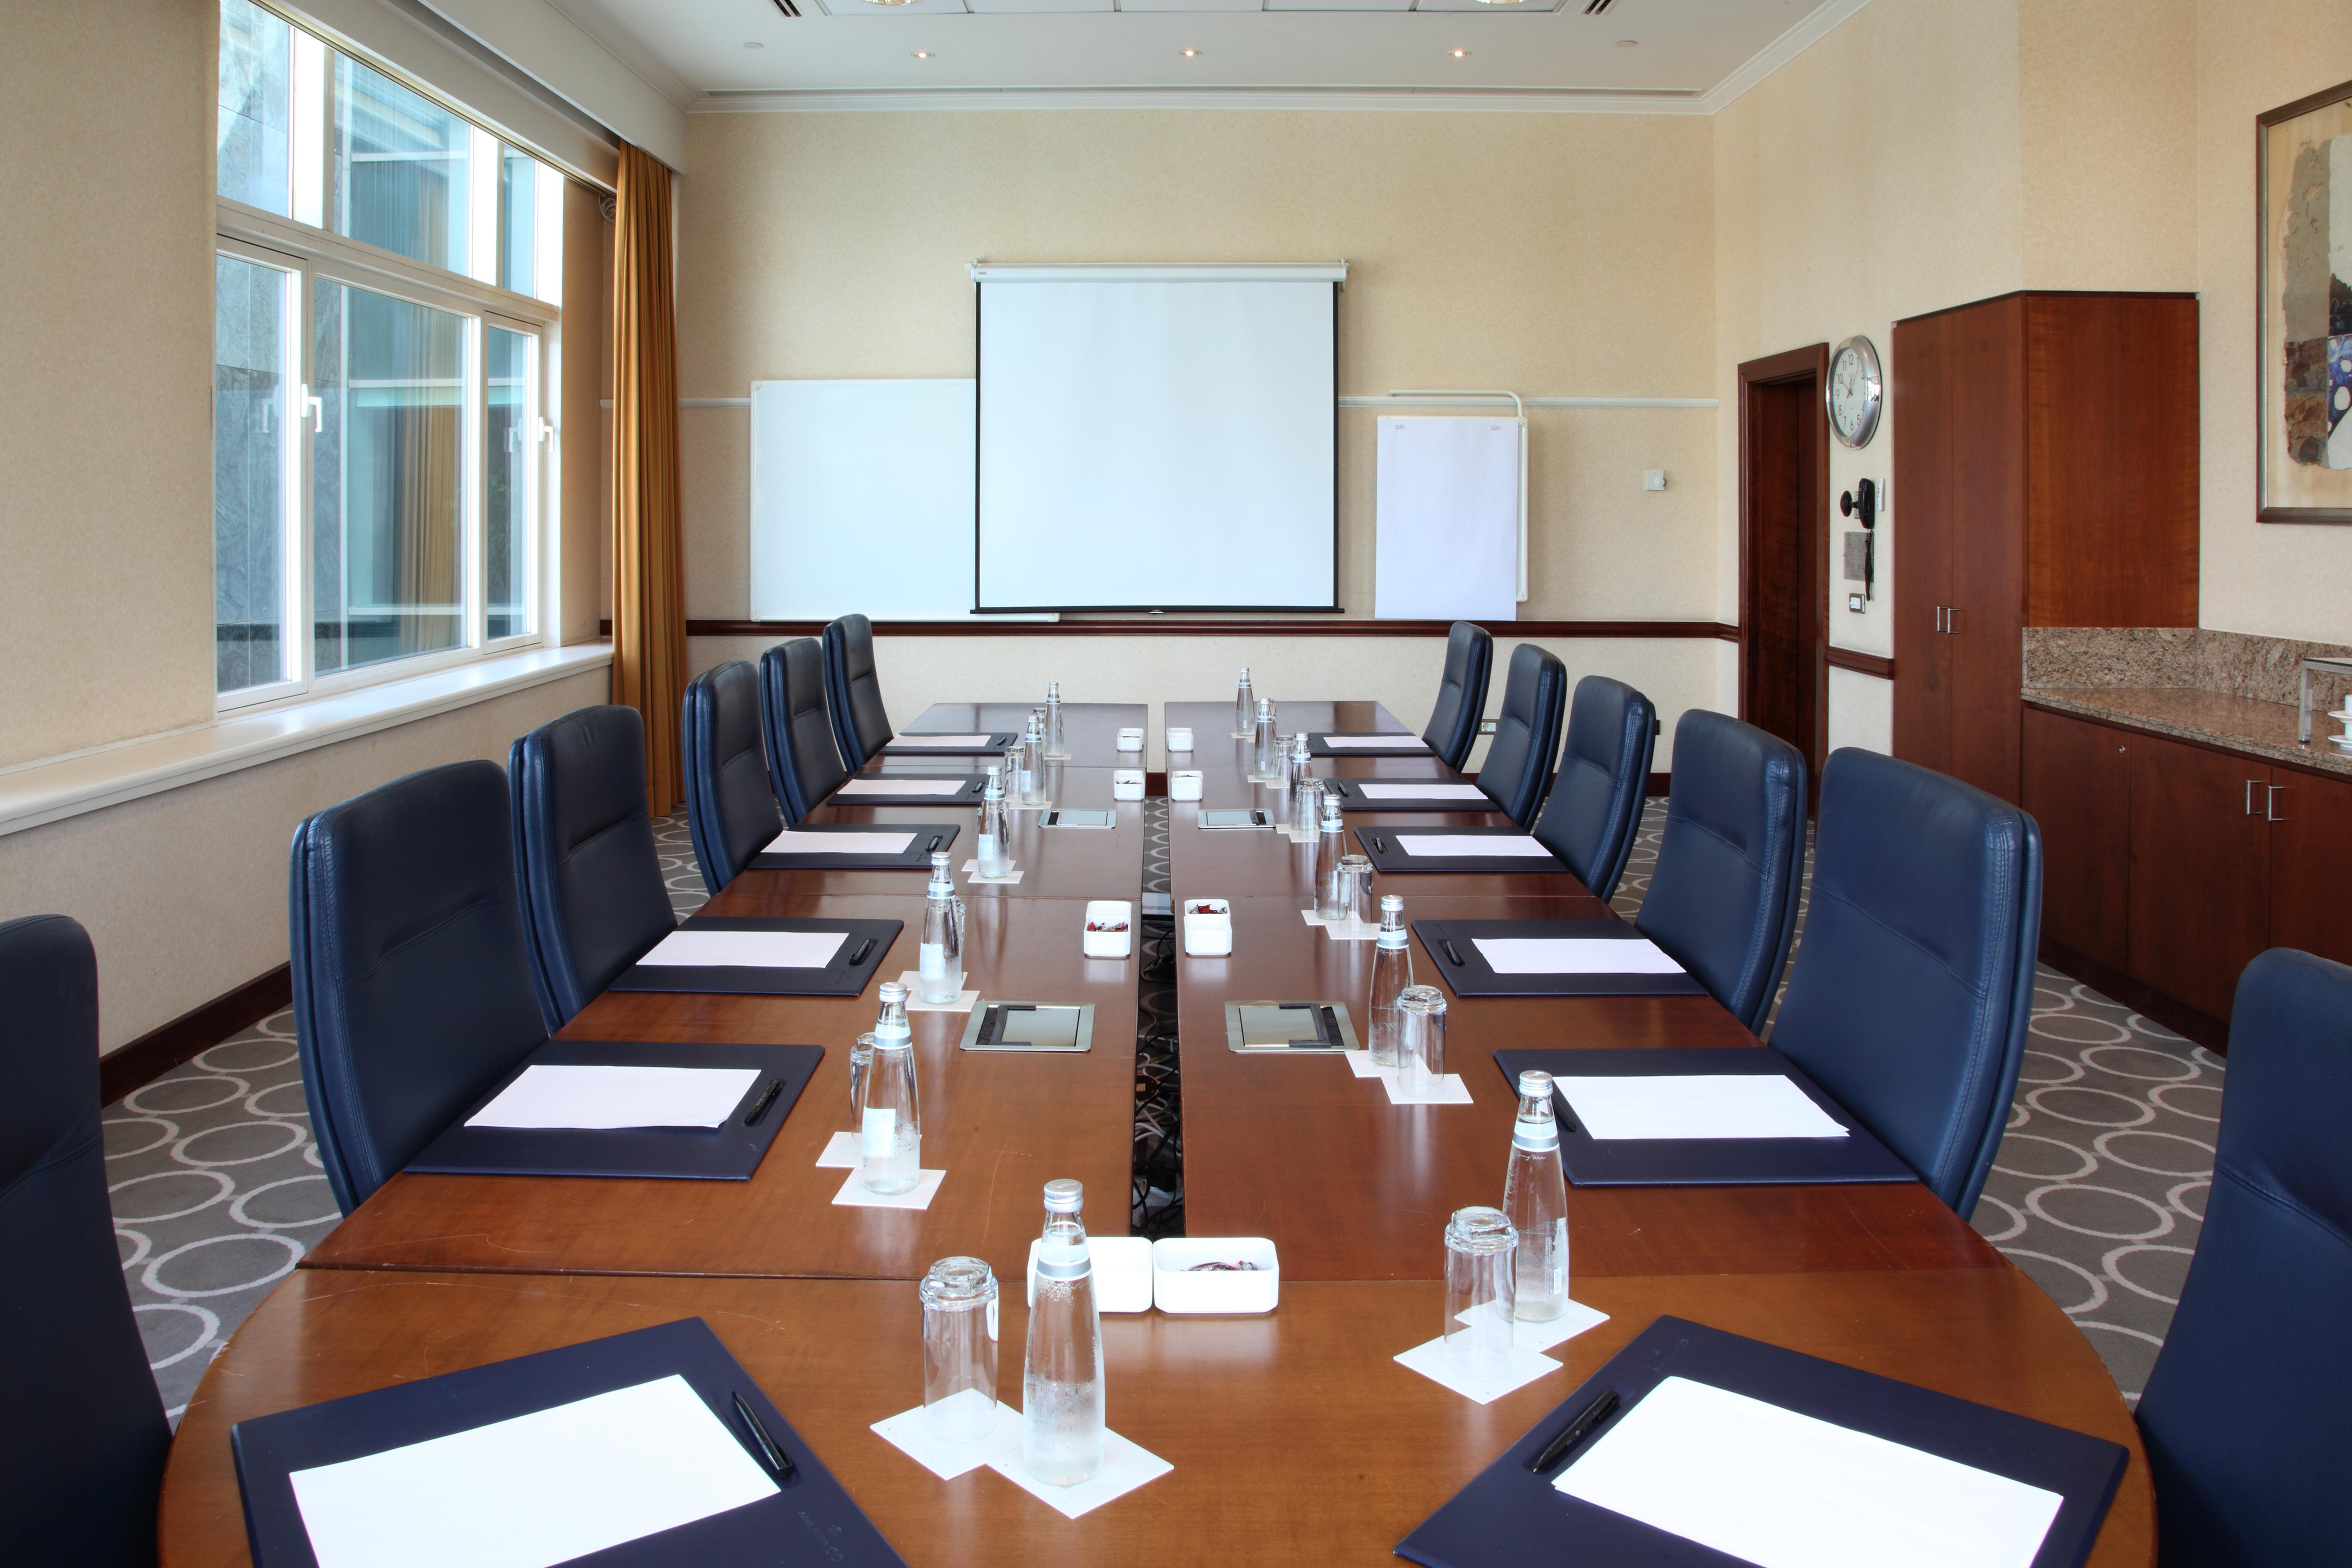 Adana HiltonSA Meeting Room with Board Meeting Set Up